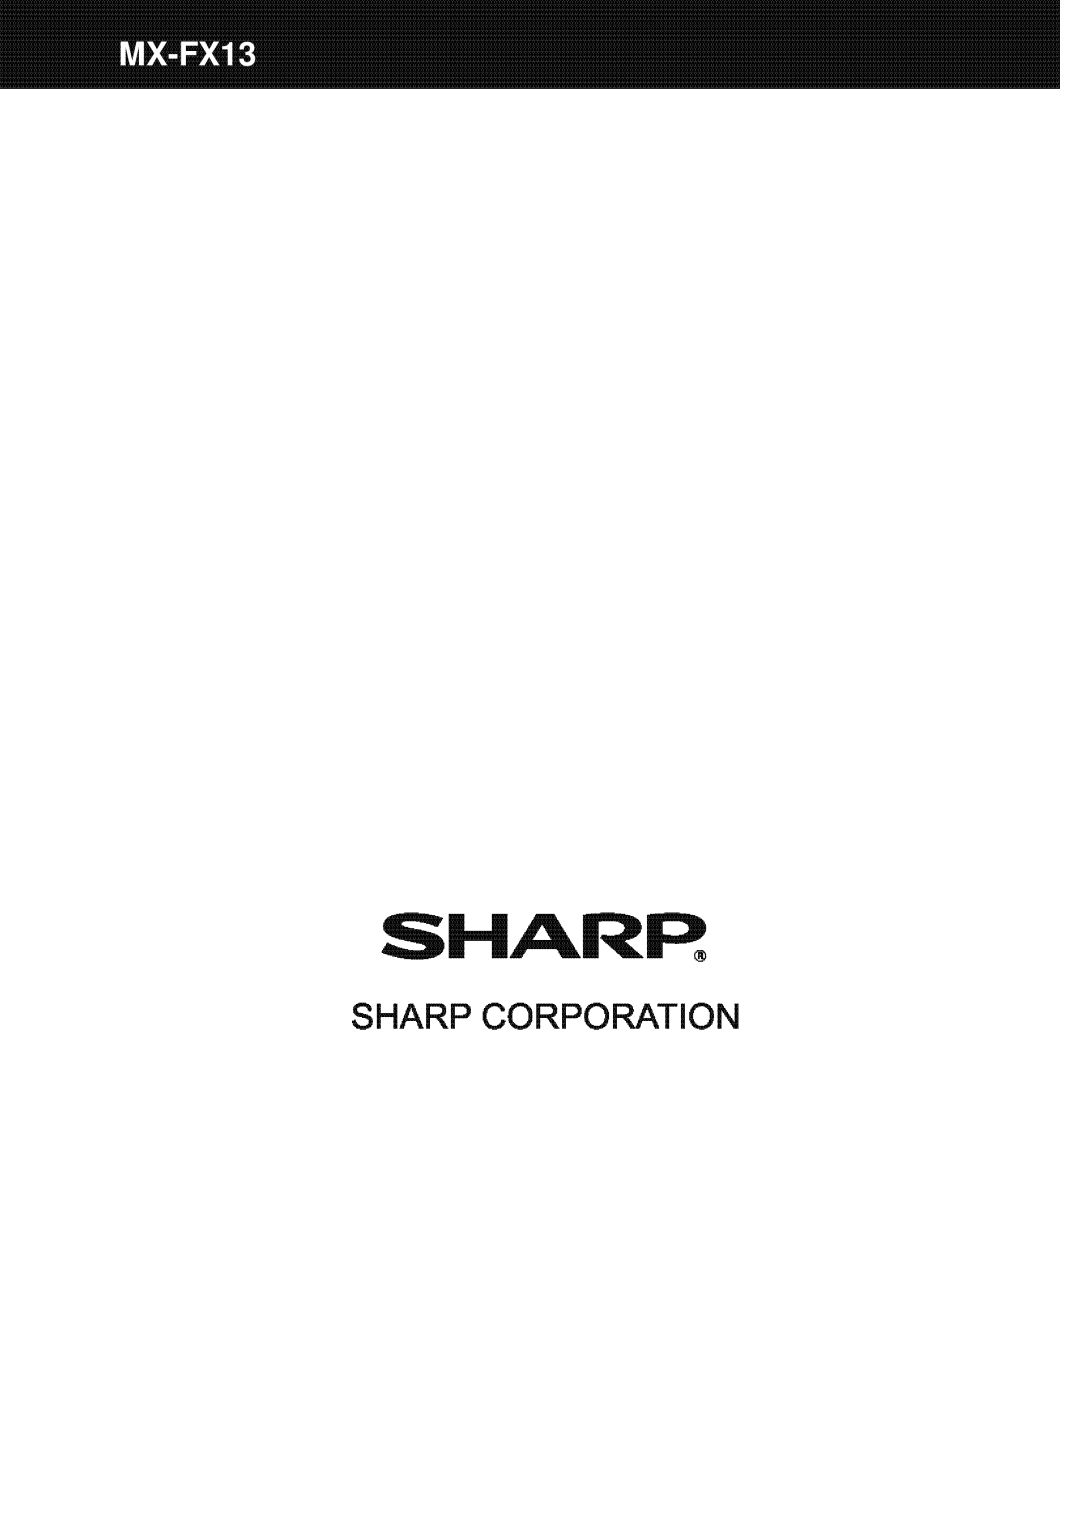 Sharp MX-FX13 appendix Shar~, Sharp Corporation 